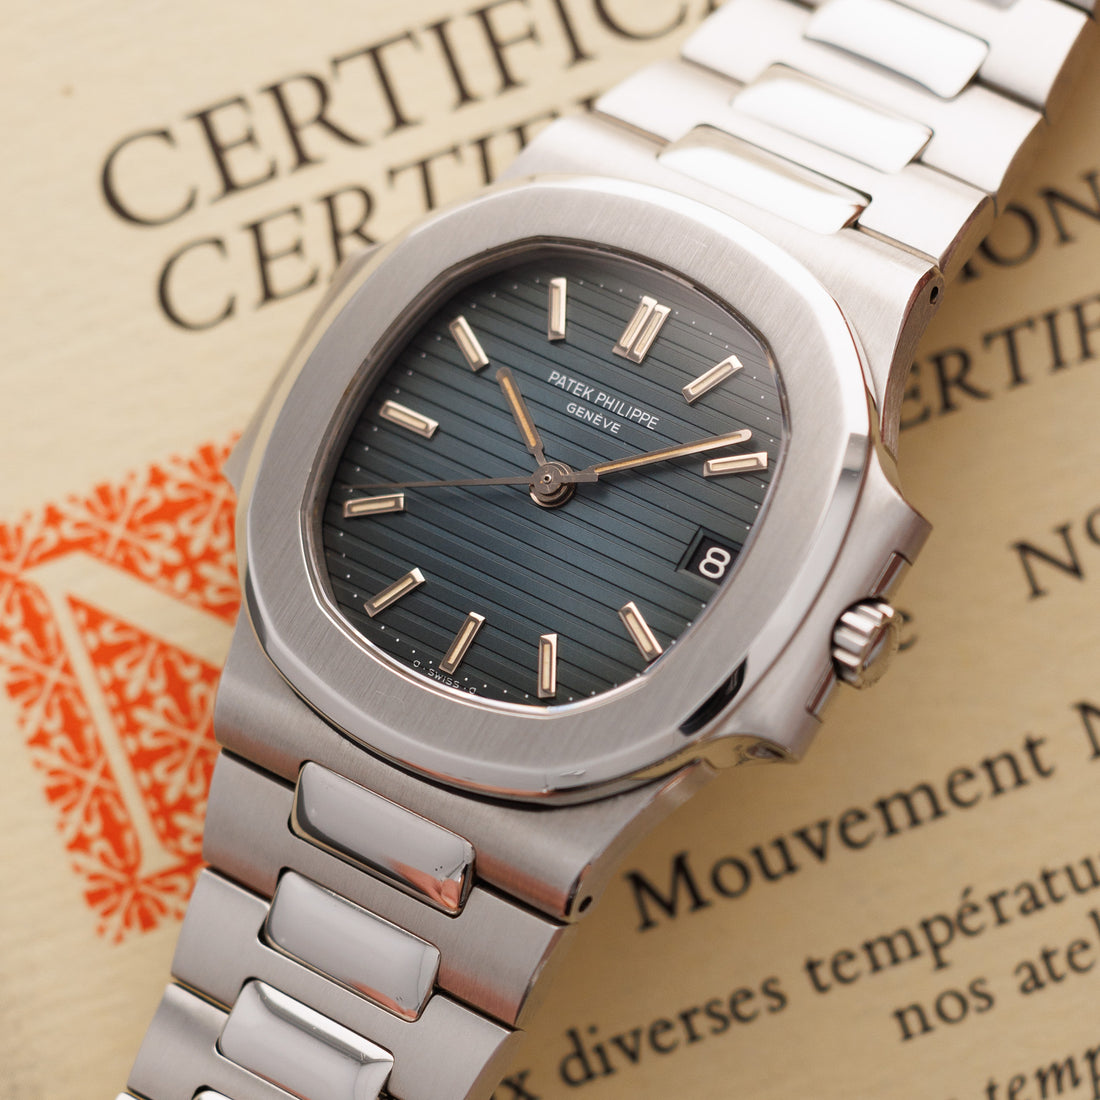 Patek Philippe Nautilus Watches for Sale - Authenticity Guaranteed 